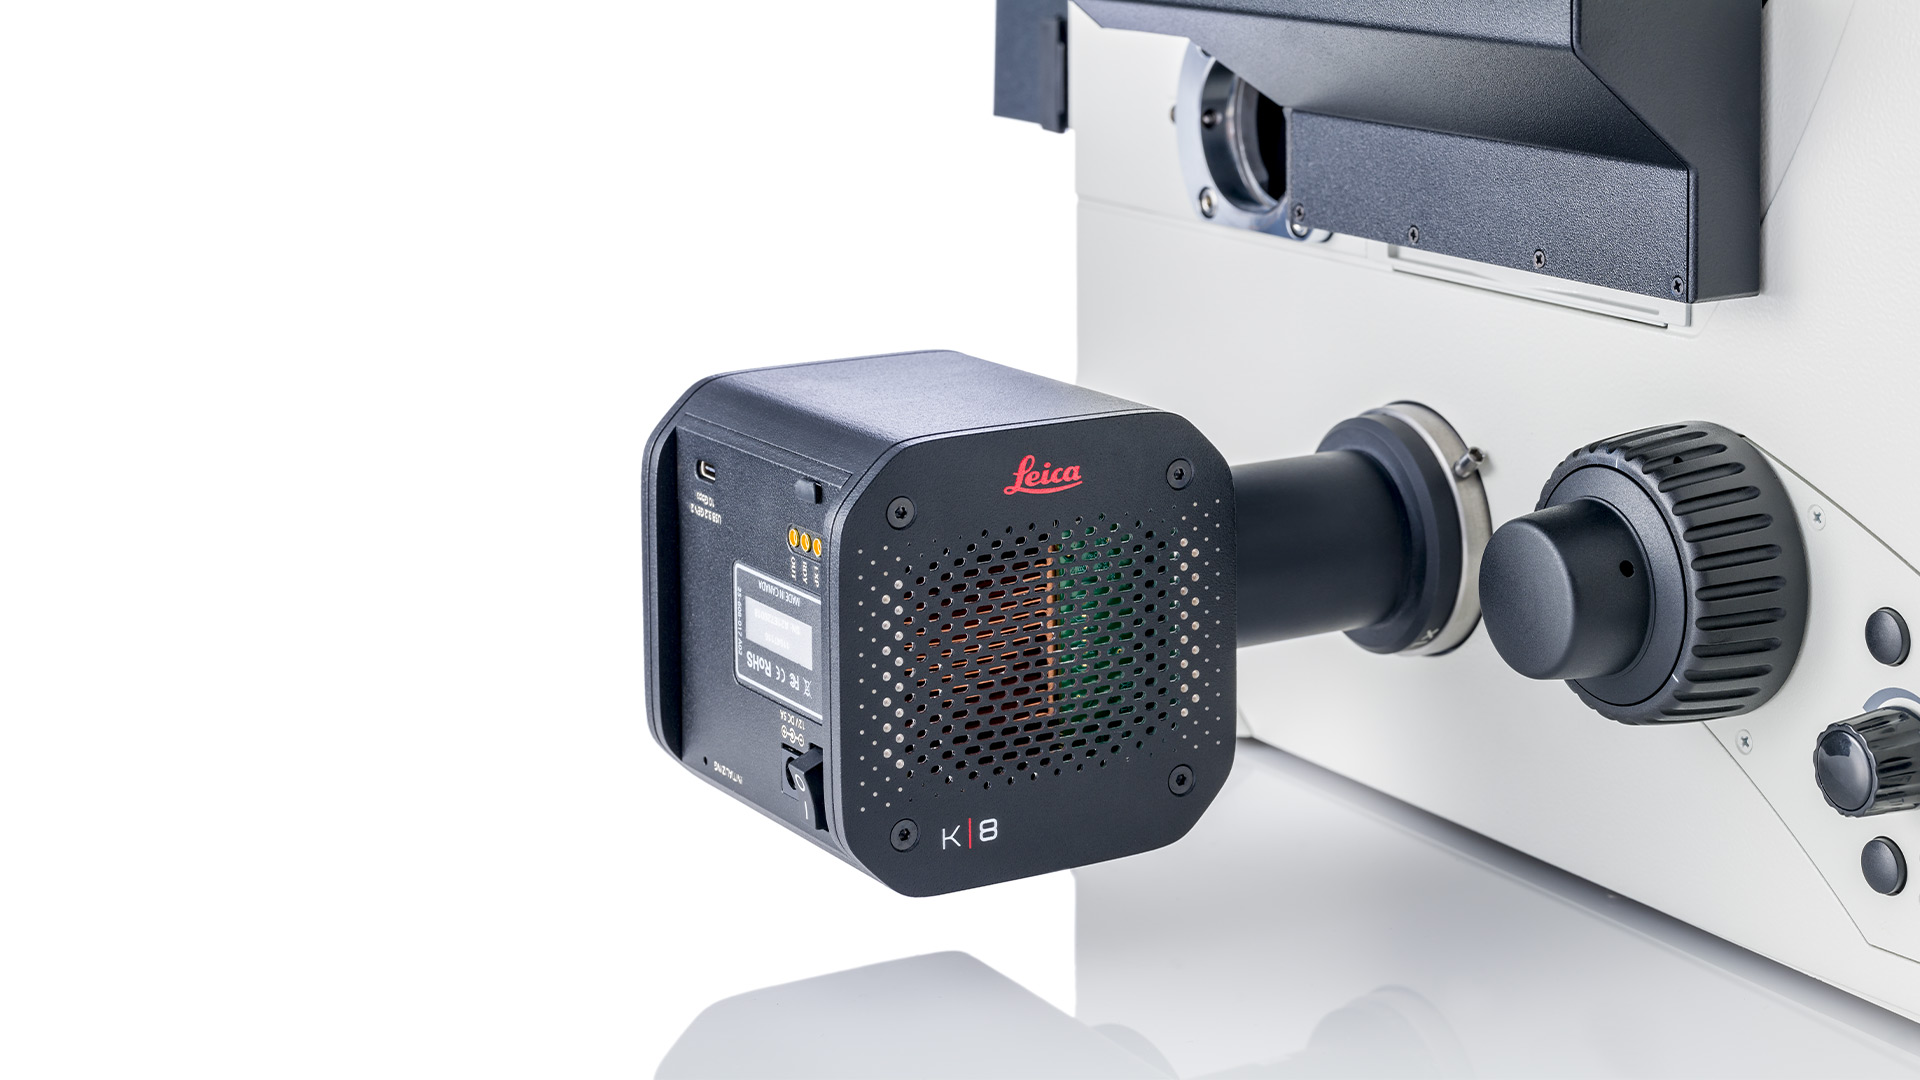 Microscope Camera K8 THUNDER Imager Live Cell